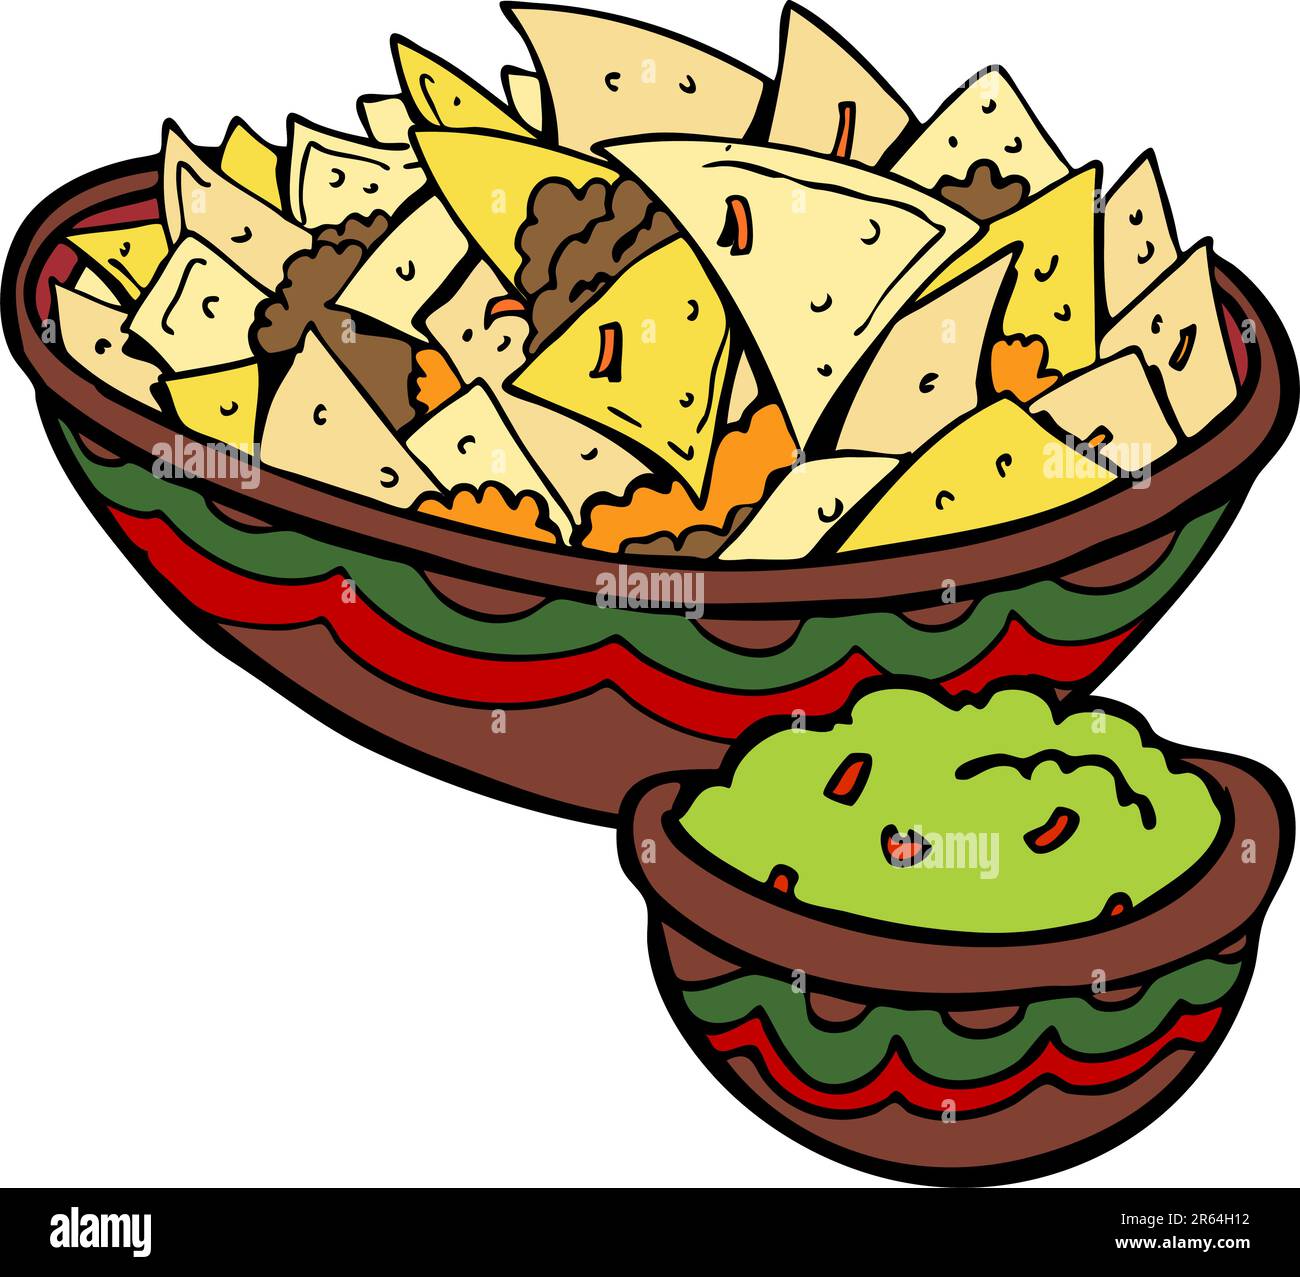 A cartoon image of nachos with guacamole. Stock Vector